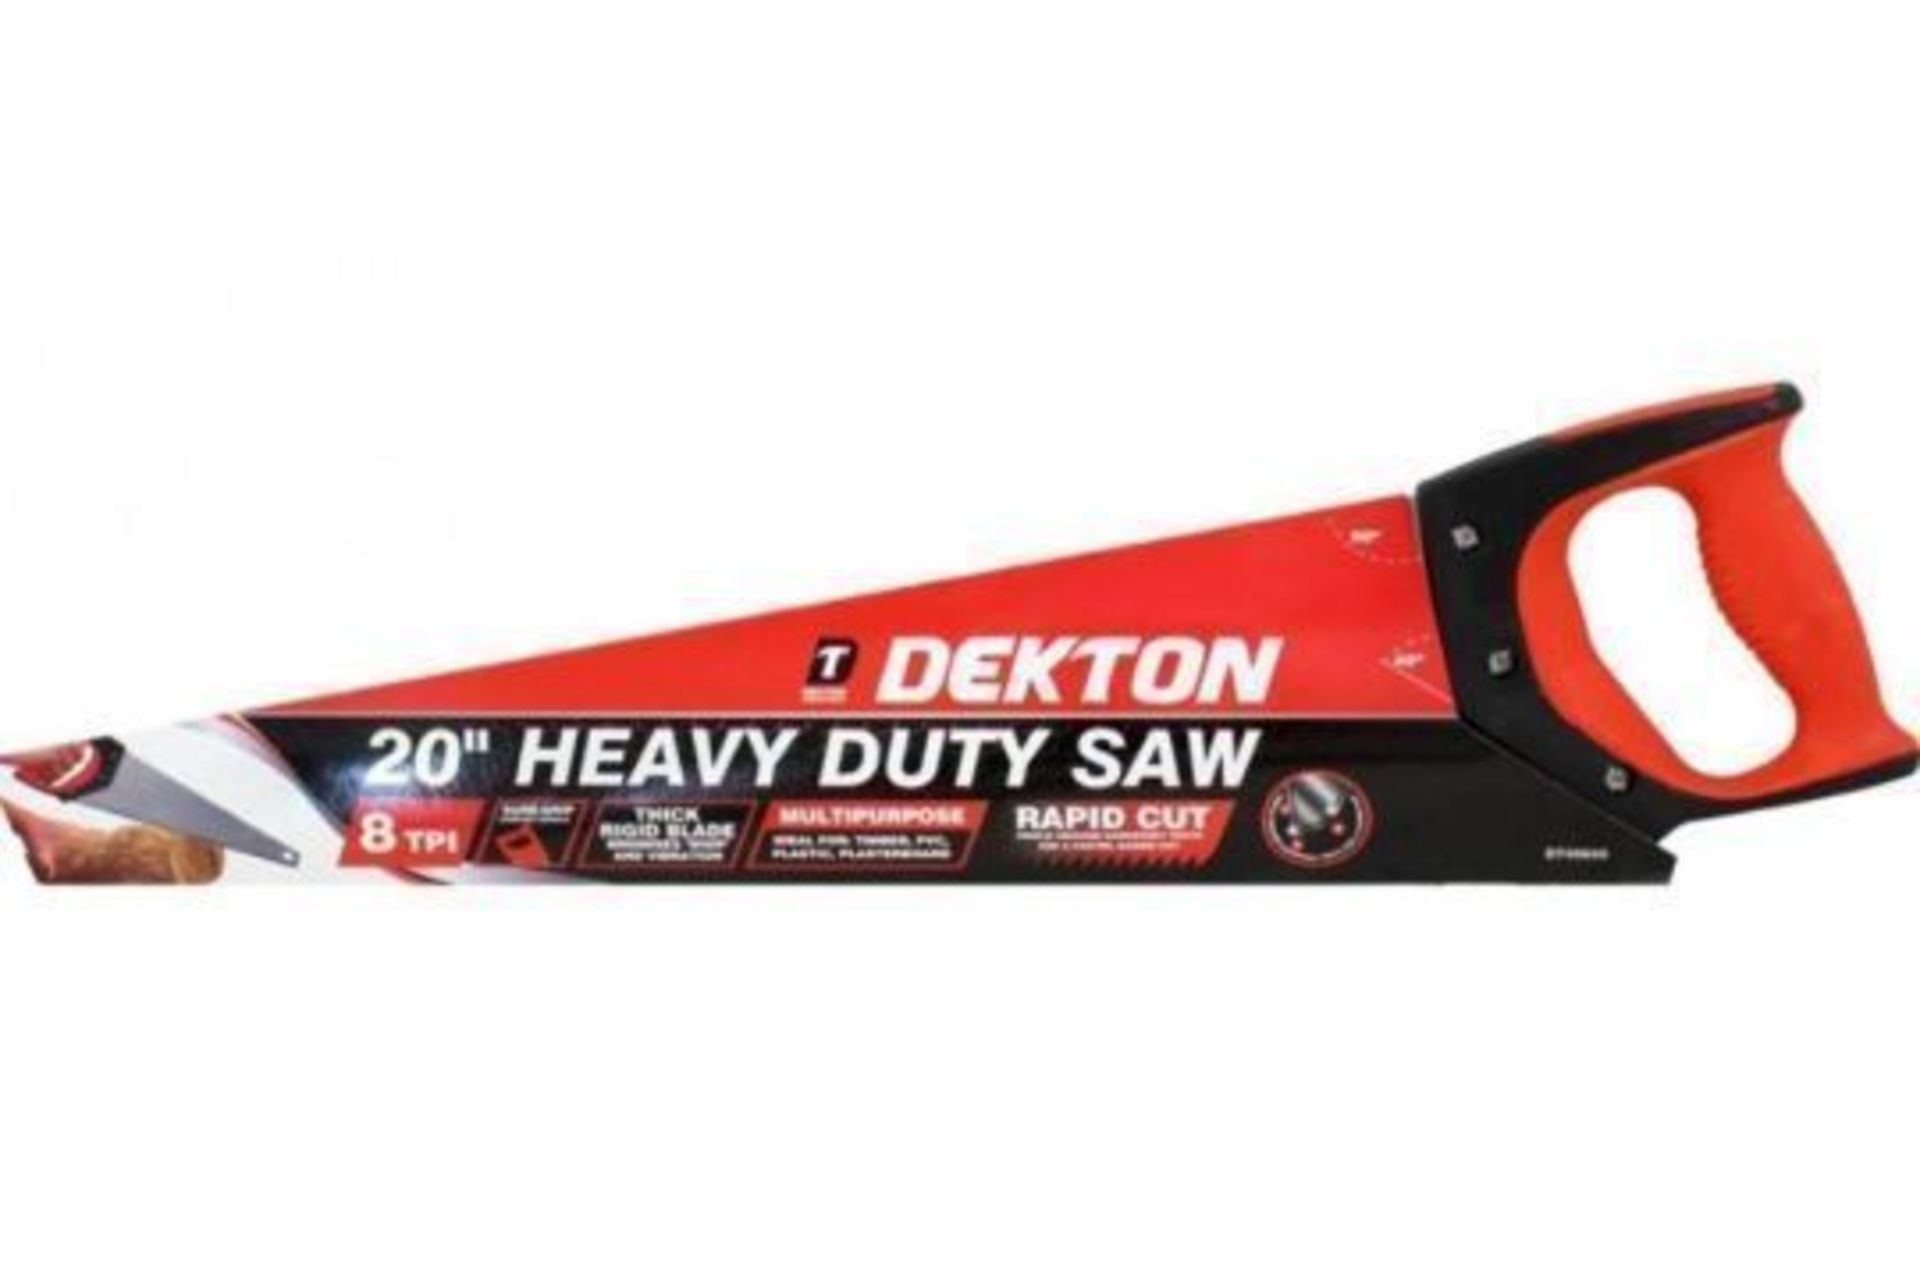 New Dekton 20" Heavy Duty Saw